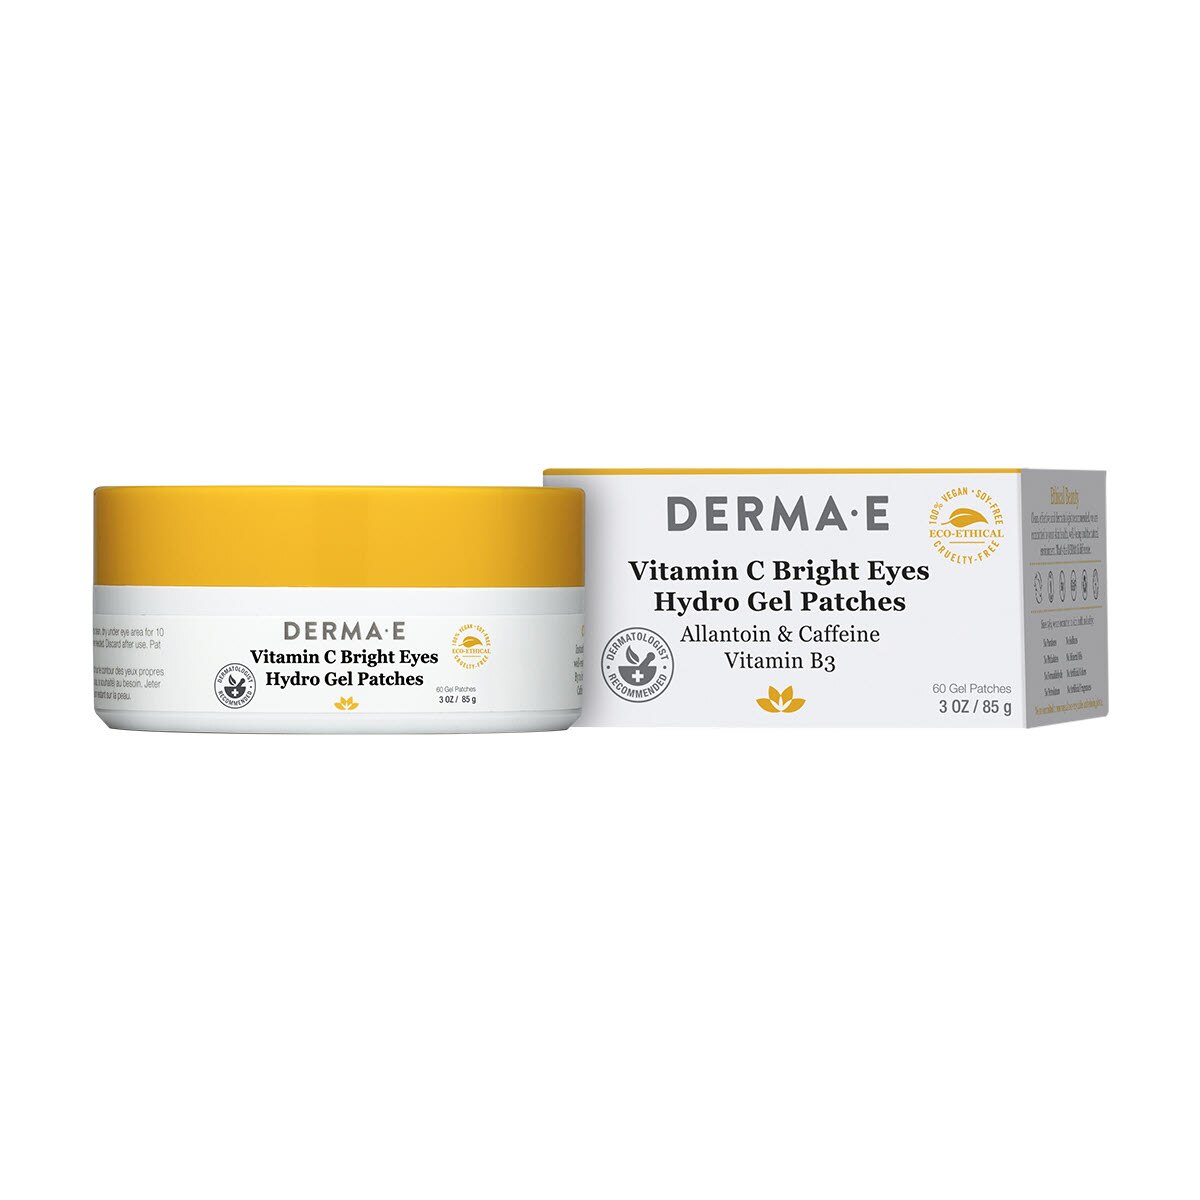 DERMA E Vitamin Bright Eyes Hydro Gel Patches, 60CT